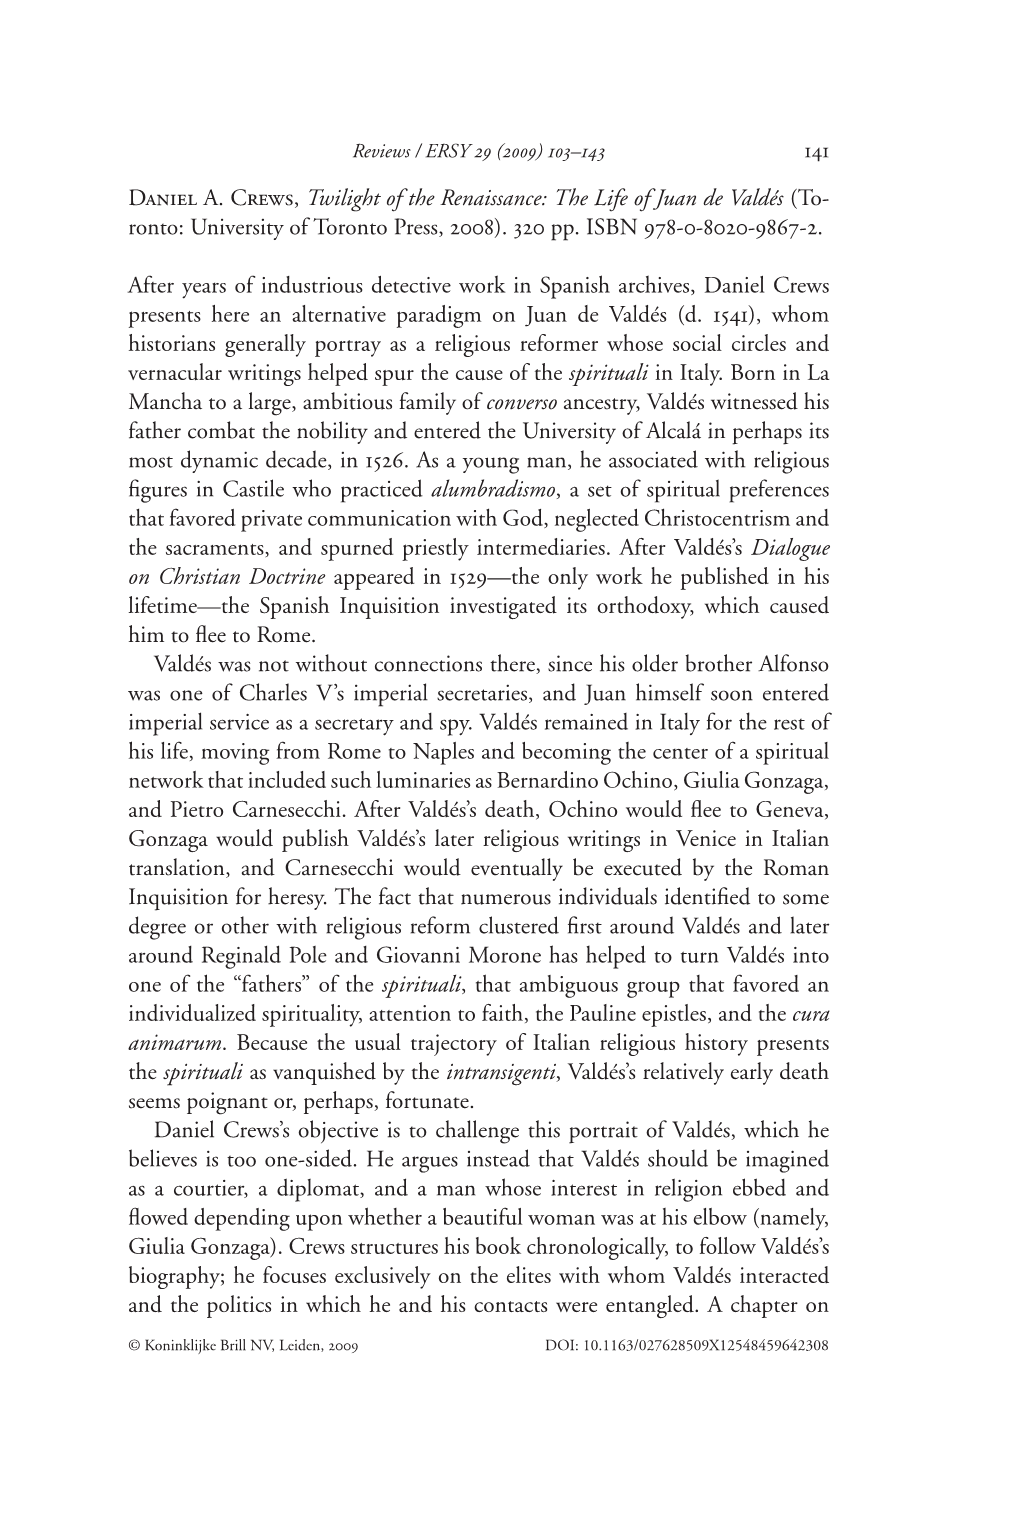 The Life of Juan De Valdés (To- Ronto: University of Toronto Press, 2008)